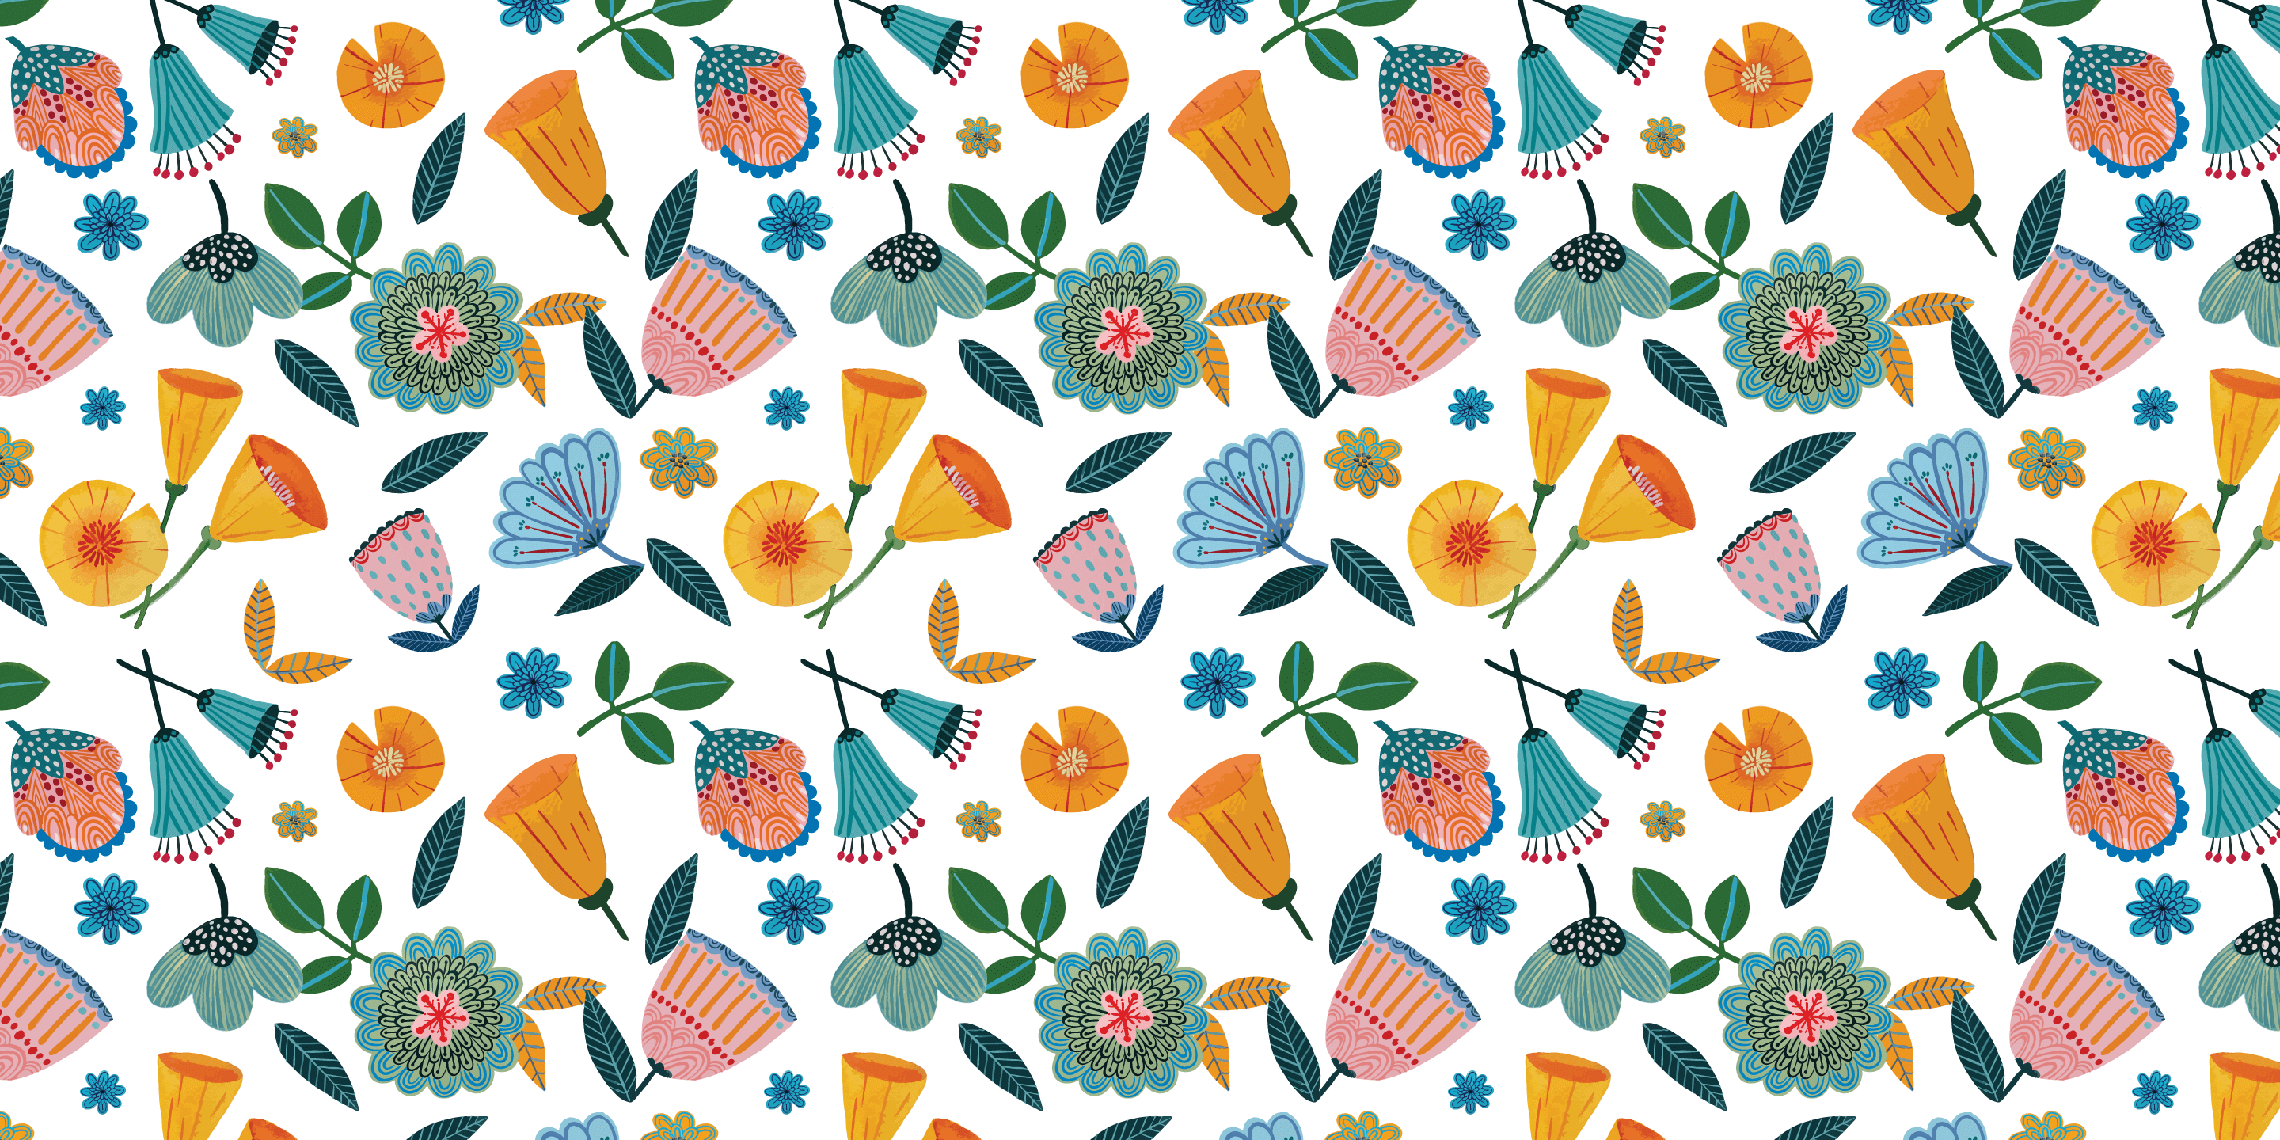 Wildflower pattern for 3 Fish Studios - Branding for an artist studio.